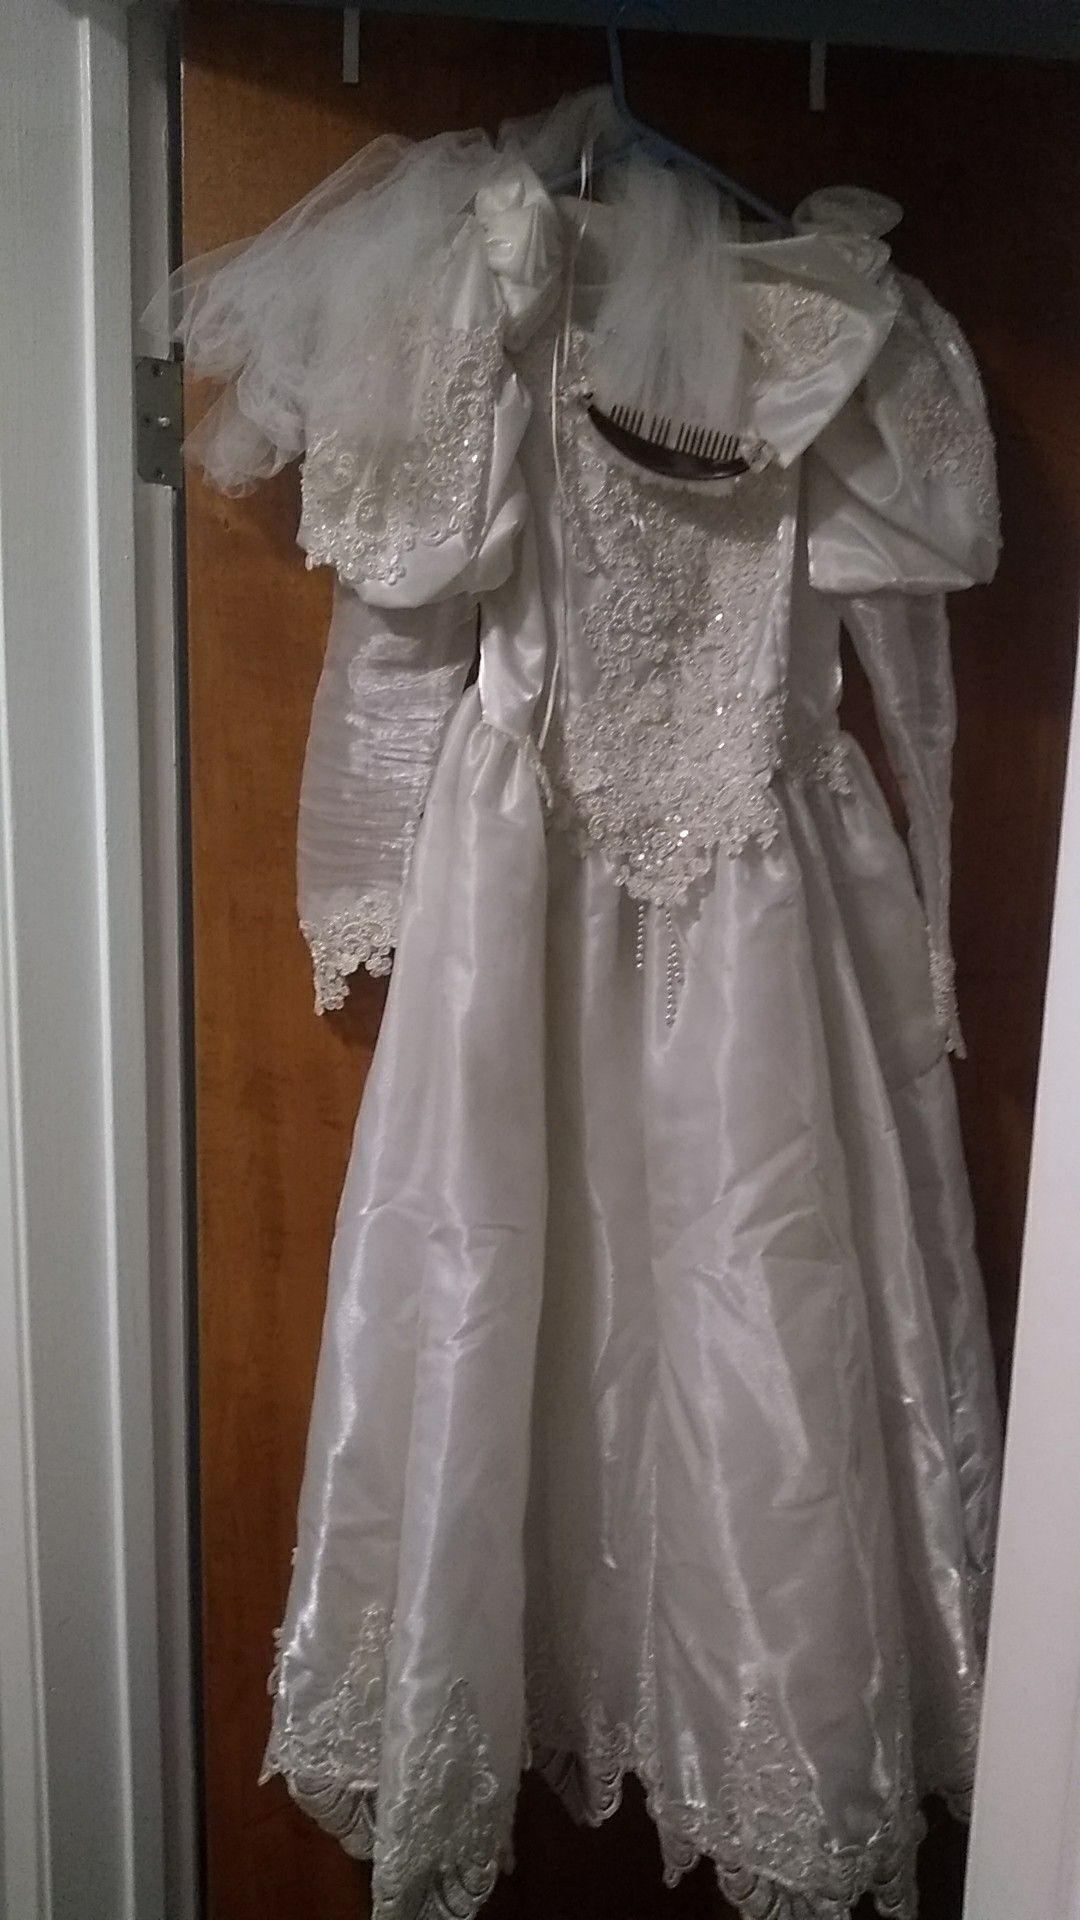 Vintage wedding dress for play dress up.